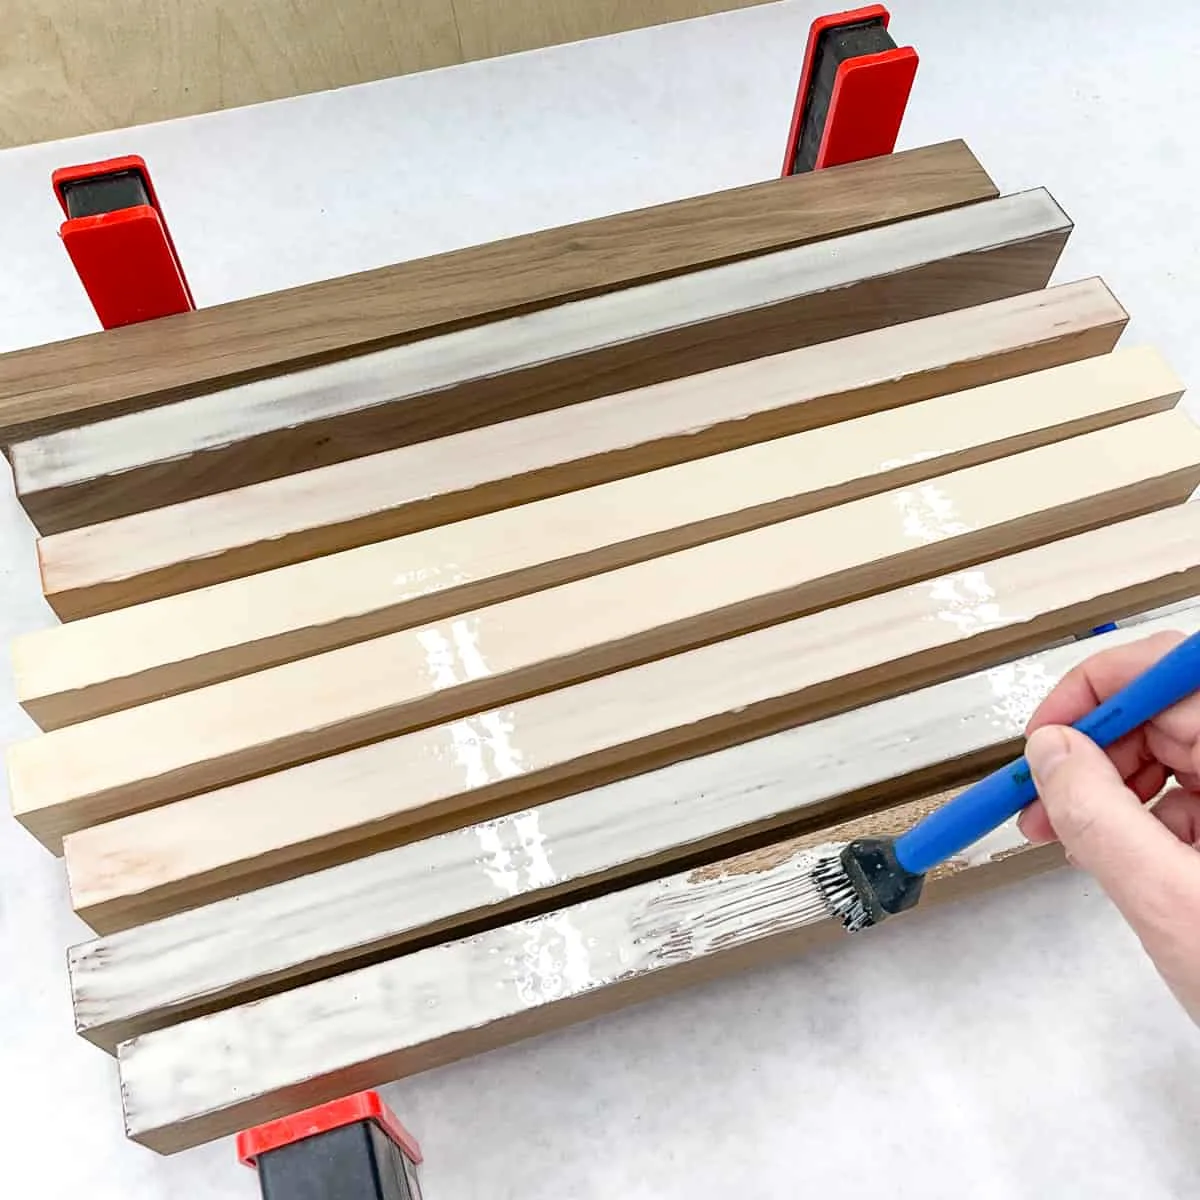 applying wood glue to cutting board strips with a glue brush